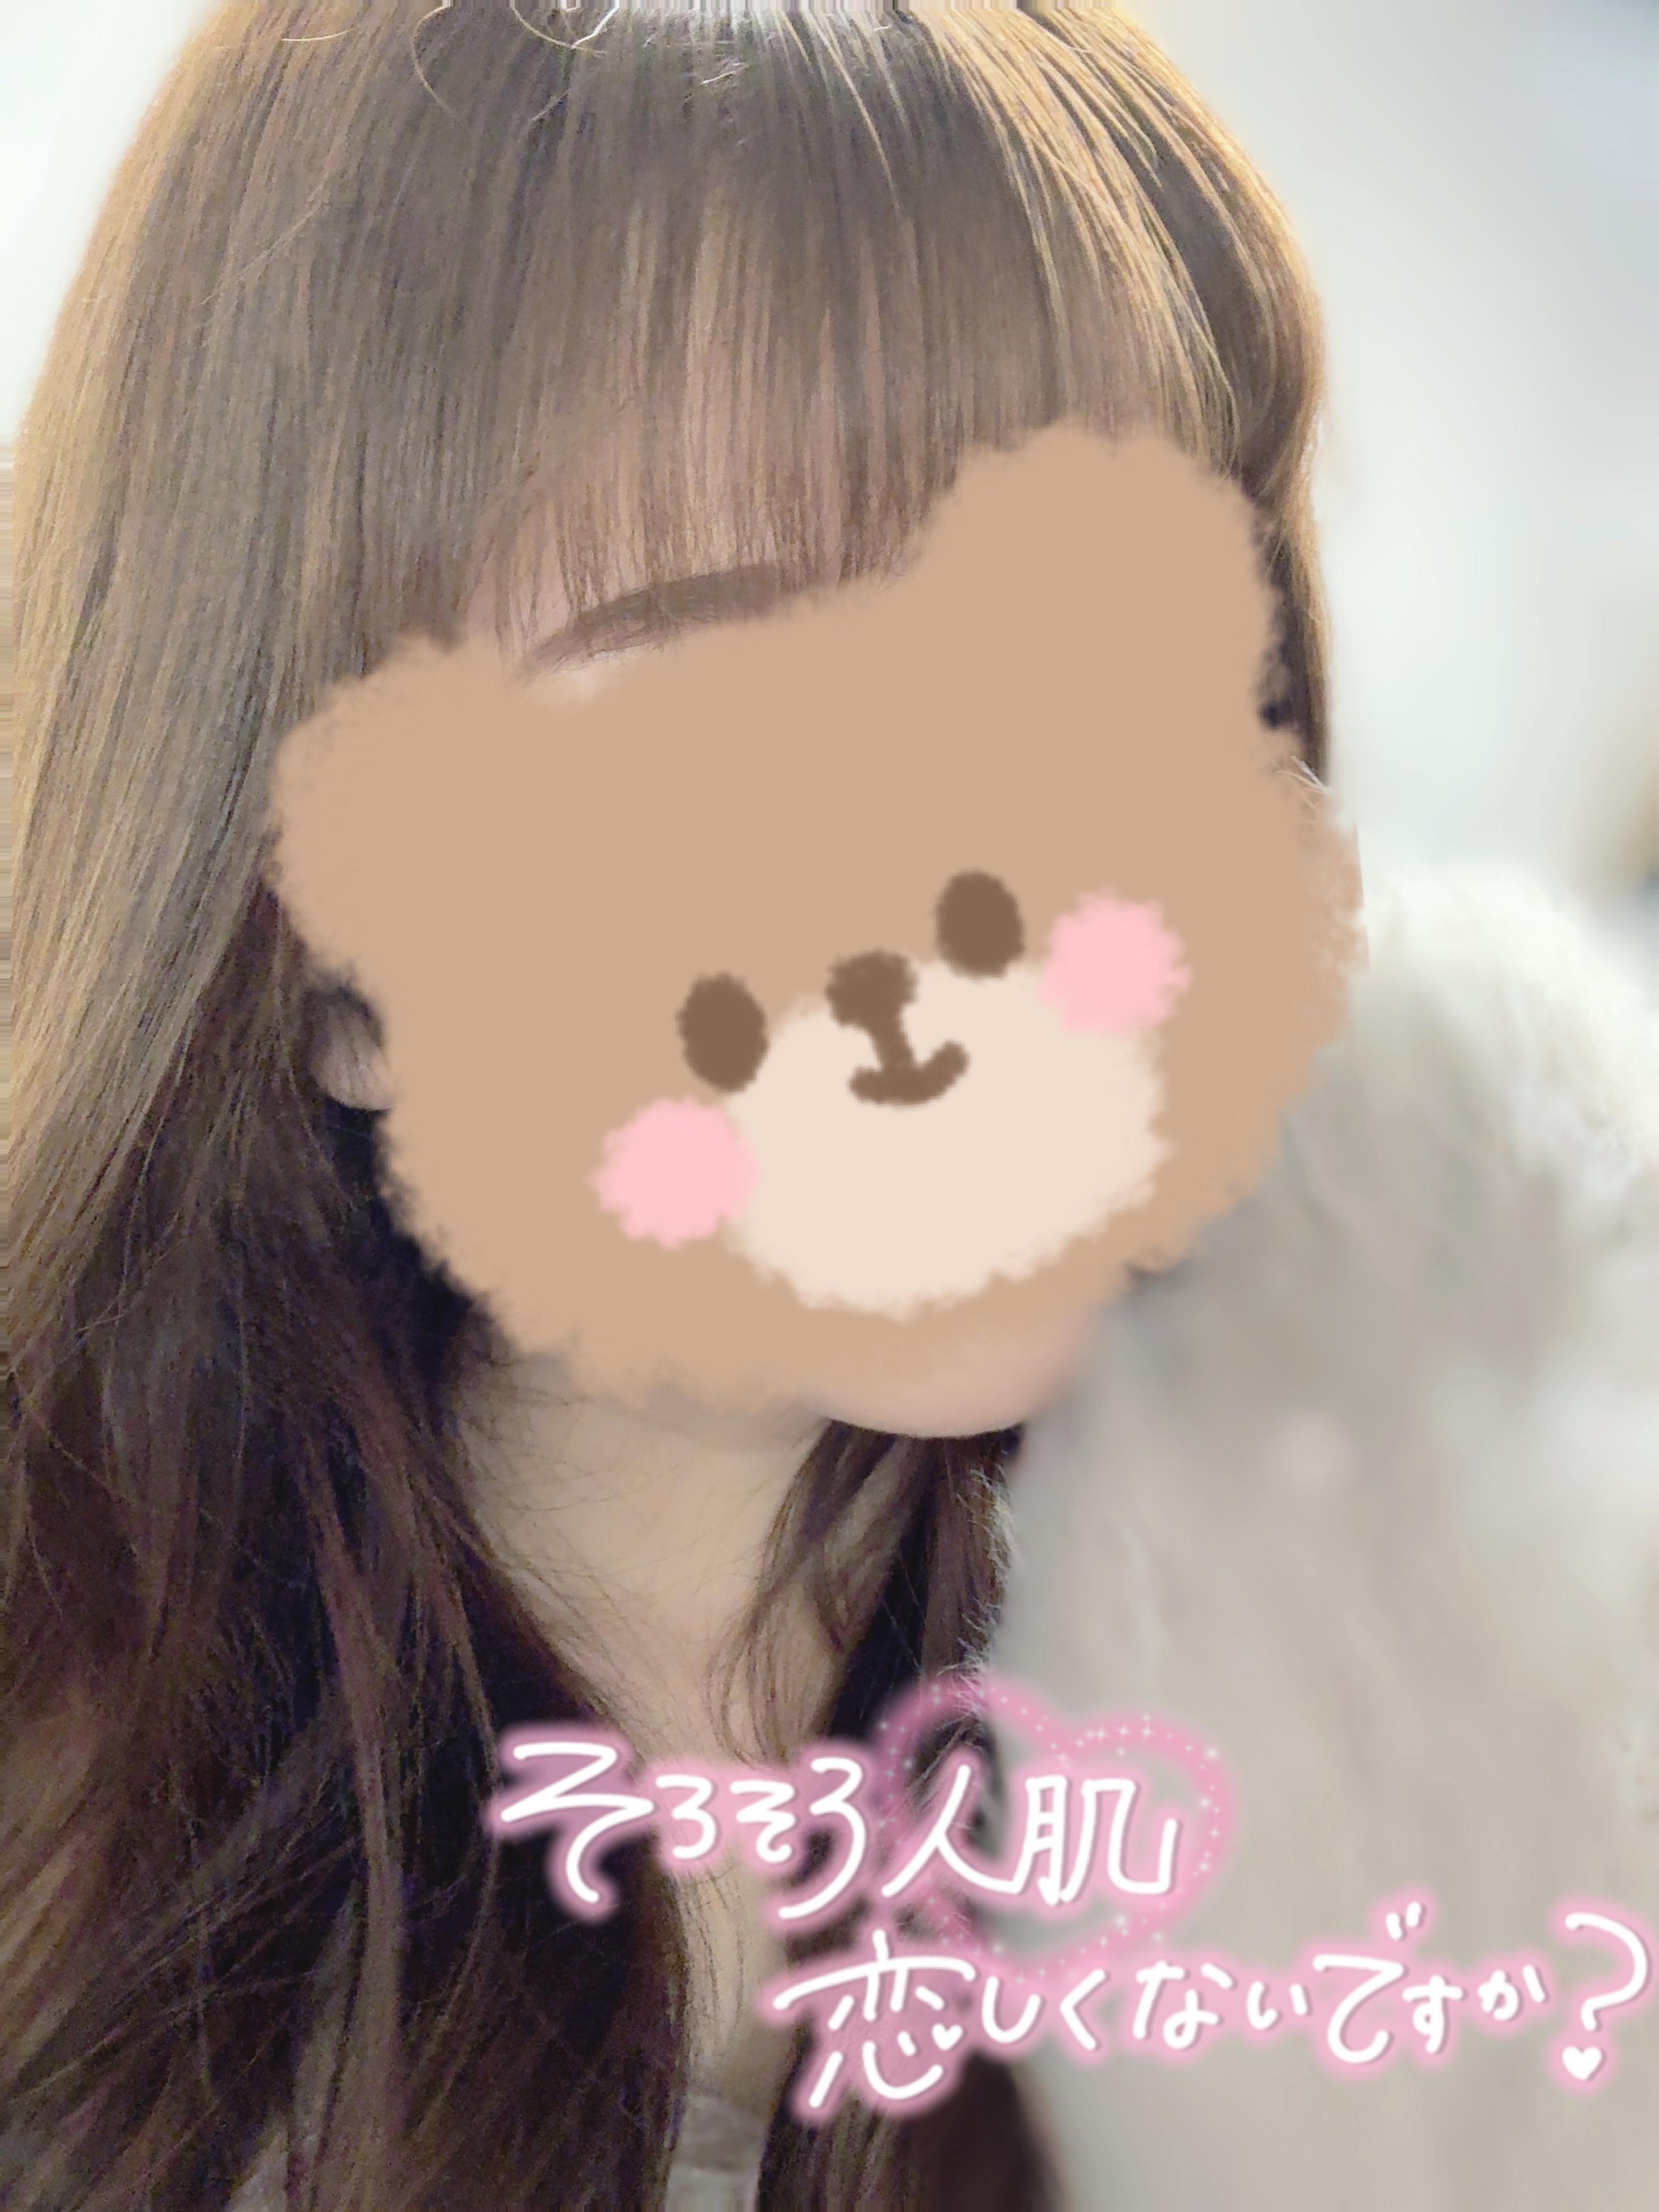 <img class="emojione" alt="✅" title=":white_check_mark:" src="https://fuzoku.jp/assets/img/emojione/2705.png"/>ゆうきの事知って欲しいな...<img class="emojione" alt="🤭" title=":face_with_hand_over_mouth:" src="https://fuzoku.jp/assets/img/emojione/1f92d.png"/>🩷